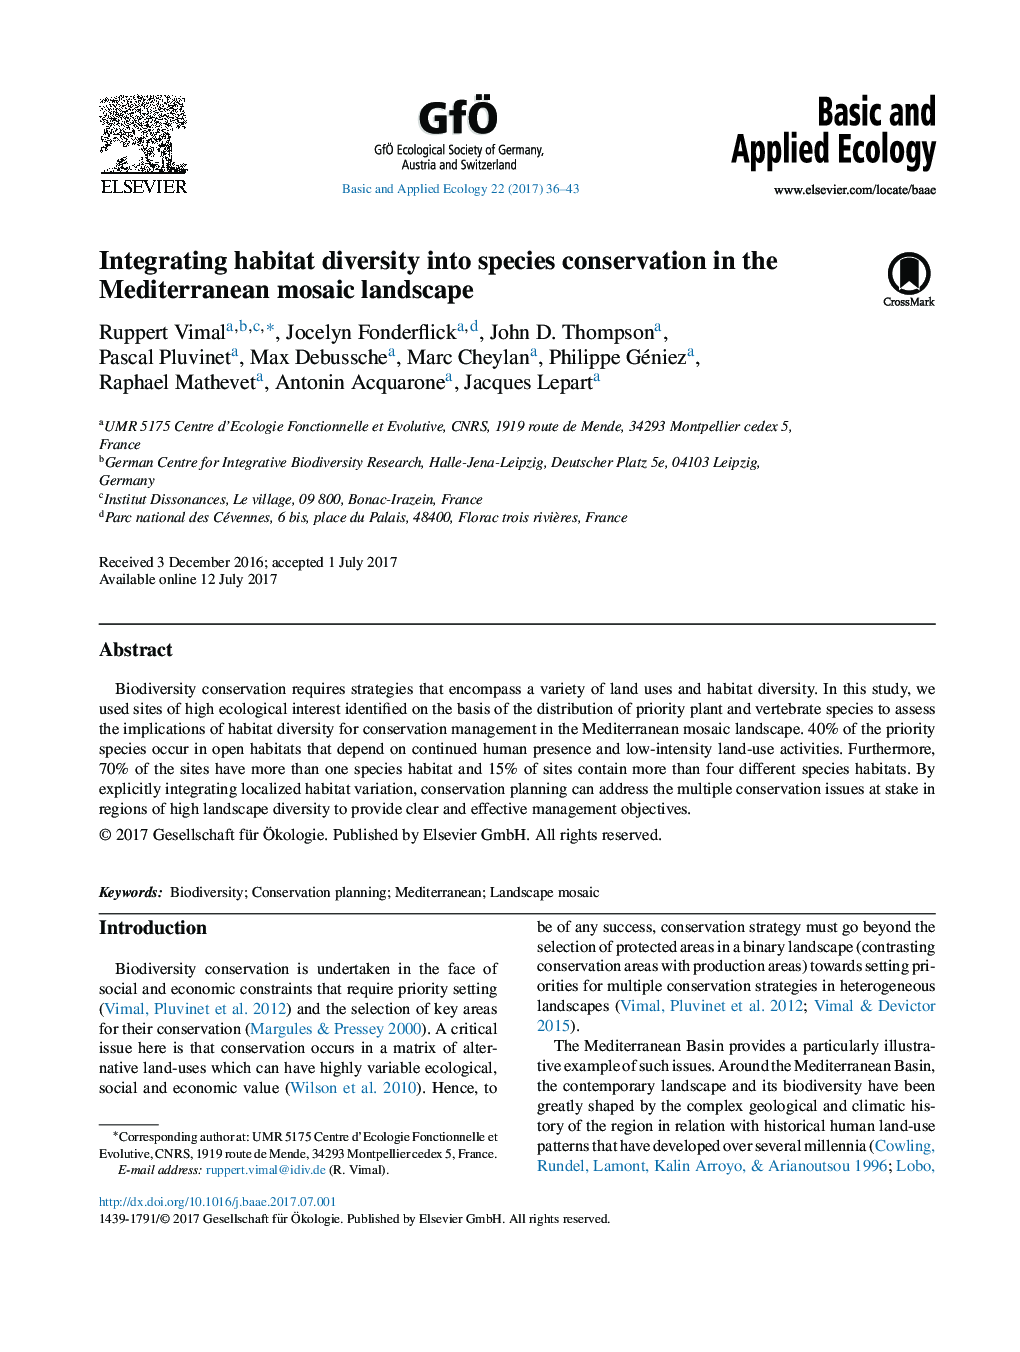 Integrating habitat diversity into species conservation in the Mediterranean mosaic landscape